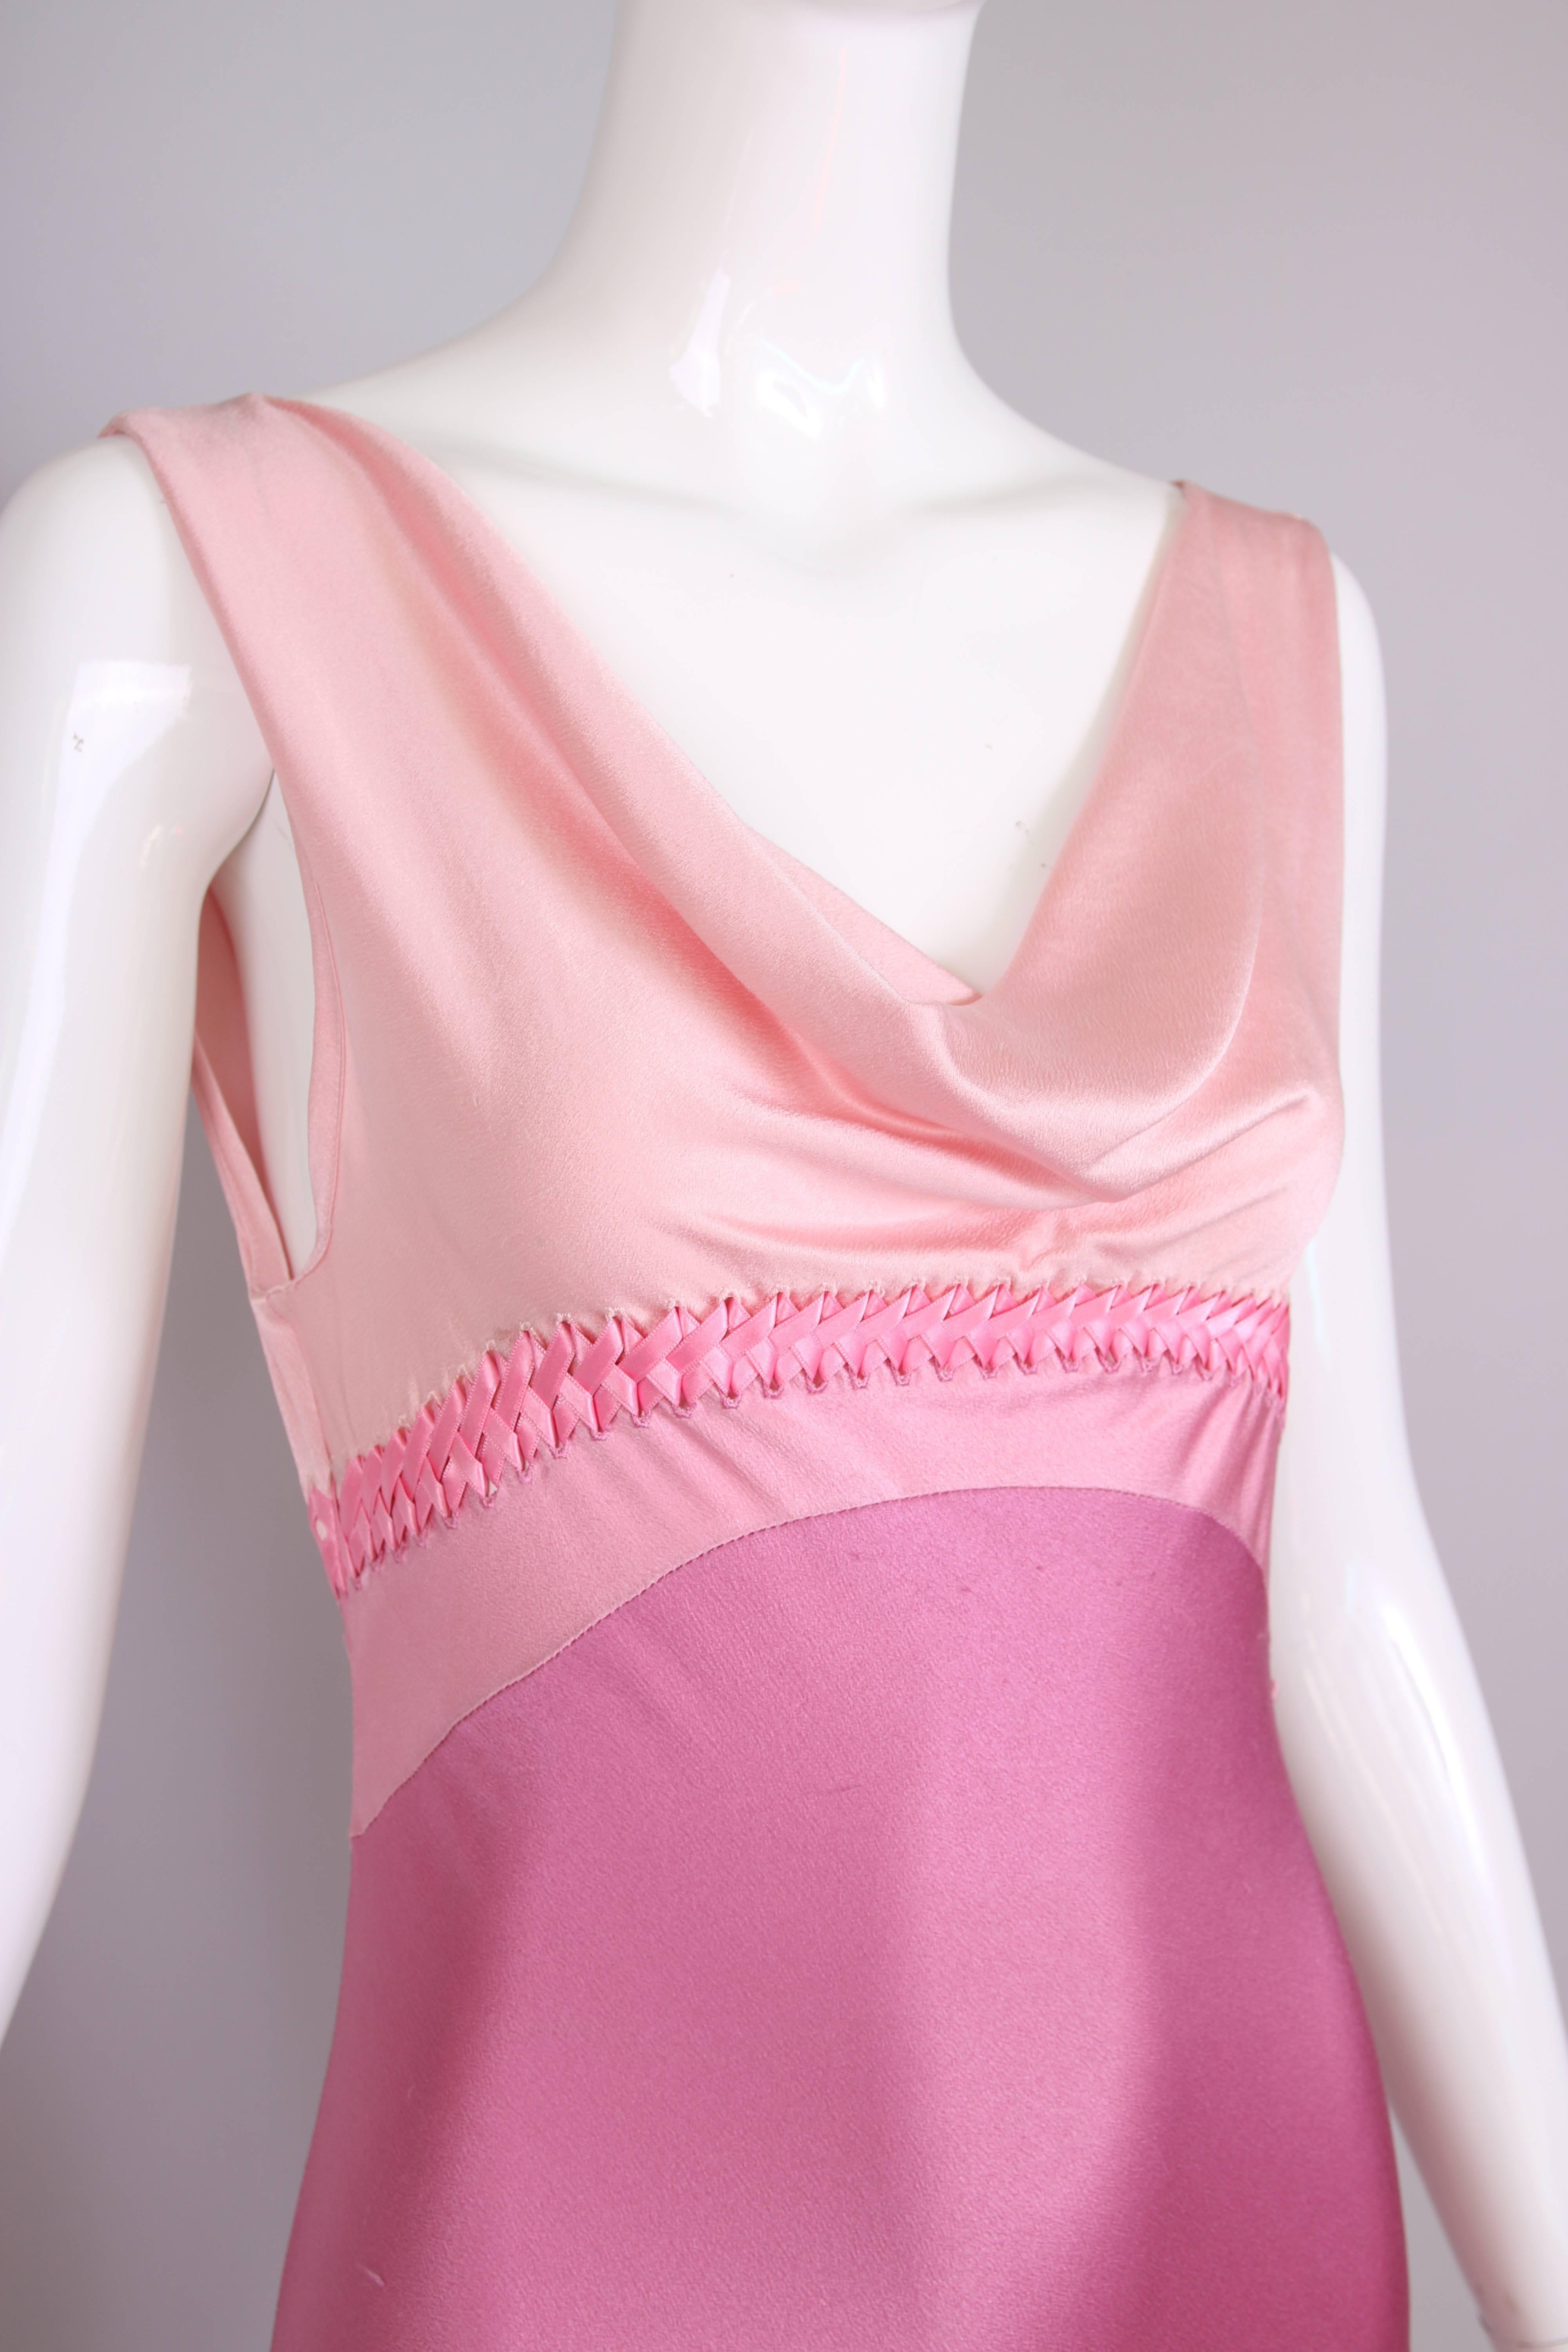 Christian Dior by Galliano Pink Silk Bias Cut Evening Gown W/Cowl Neckline 2